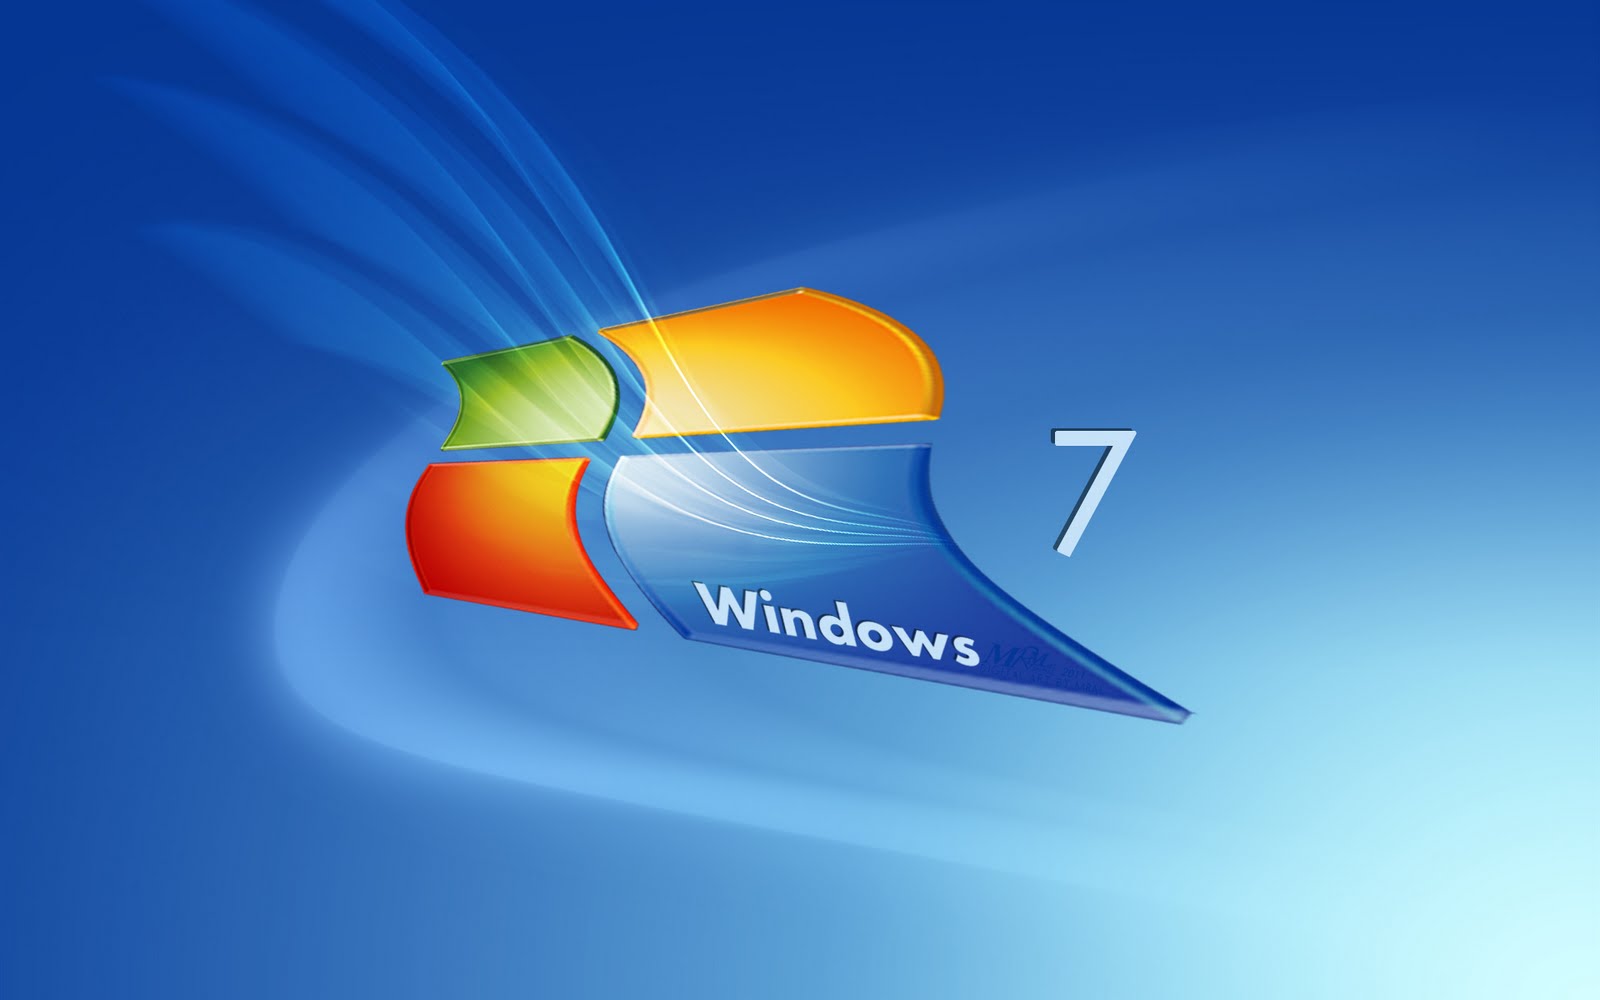 wallpaper hd 1080p: New Wallpaper Windows 7